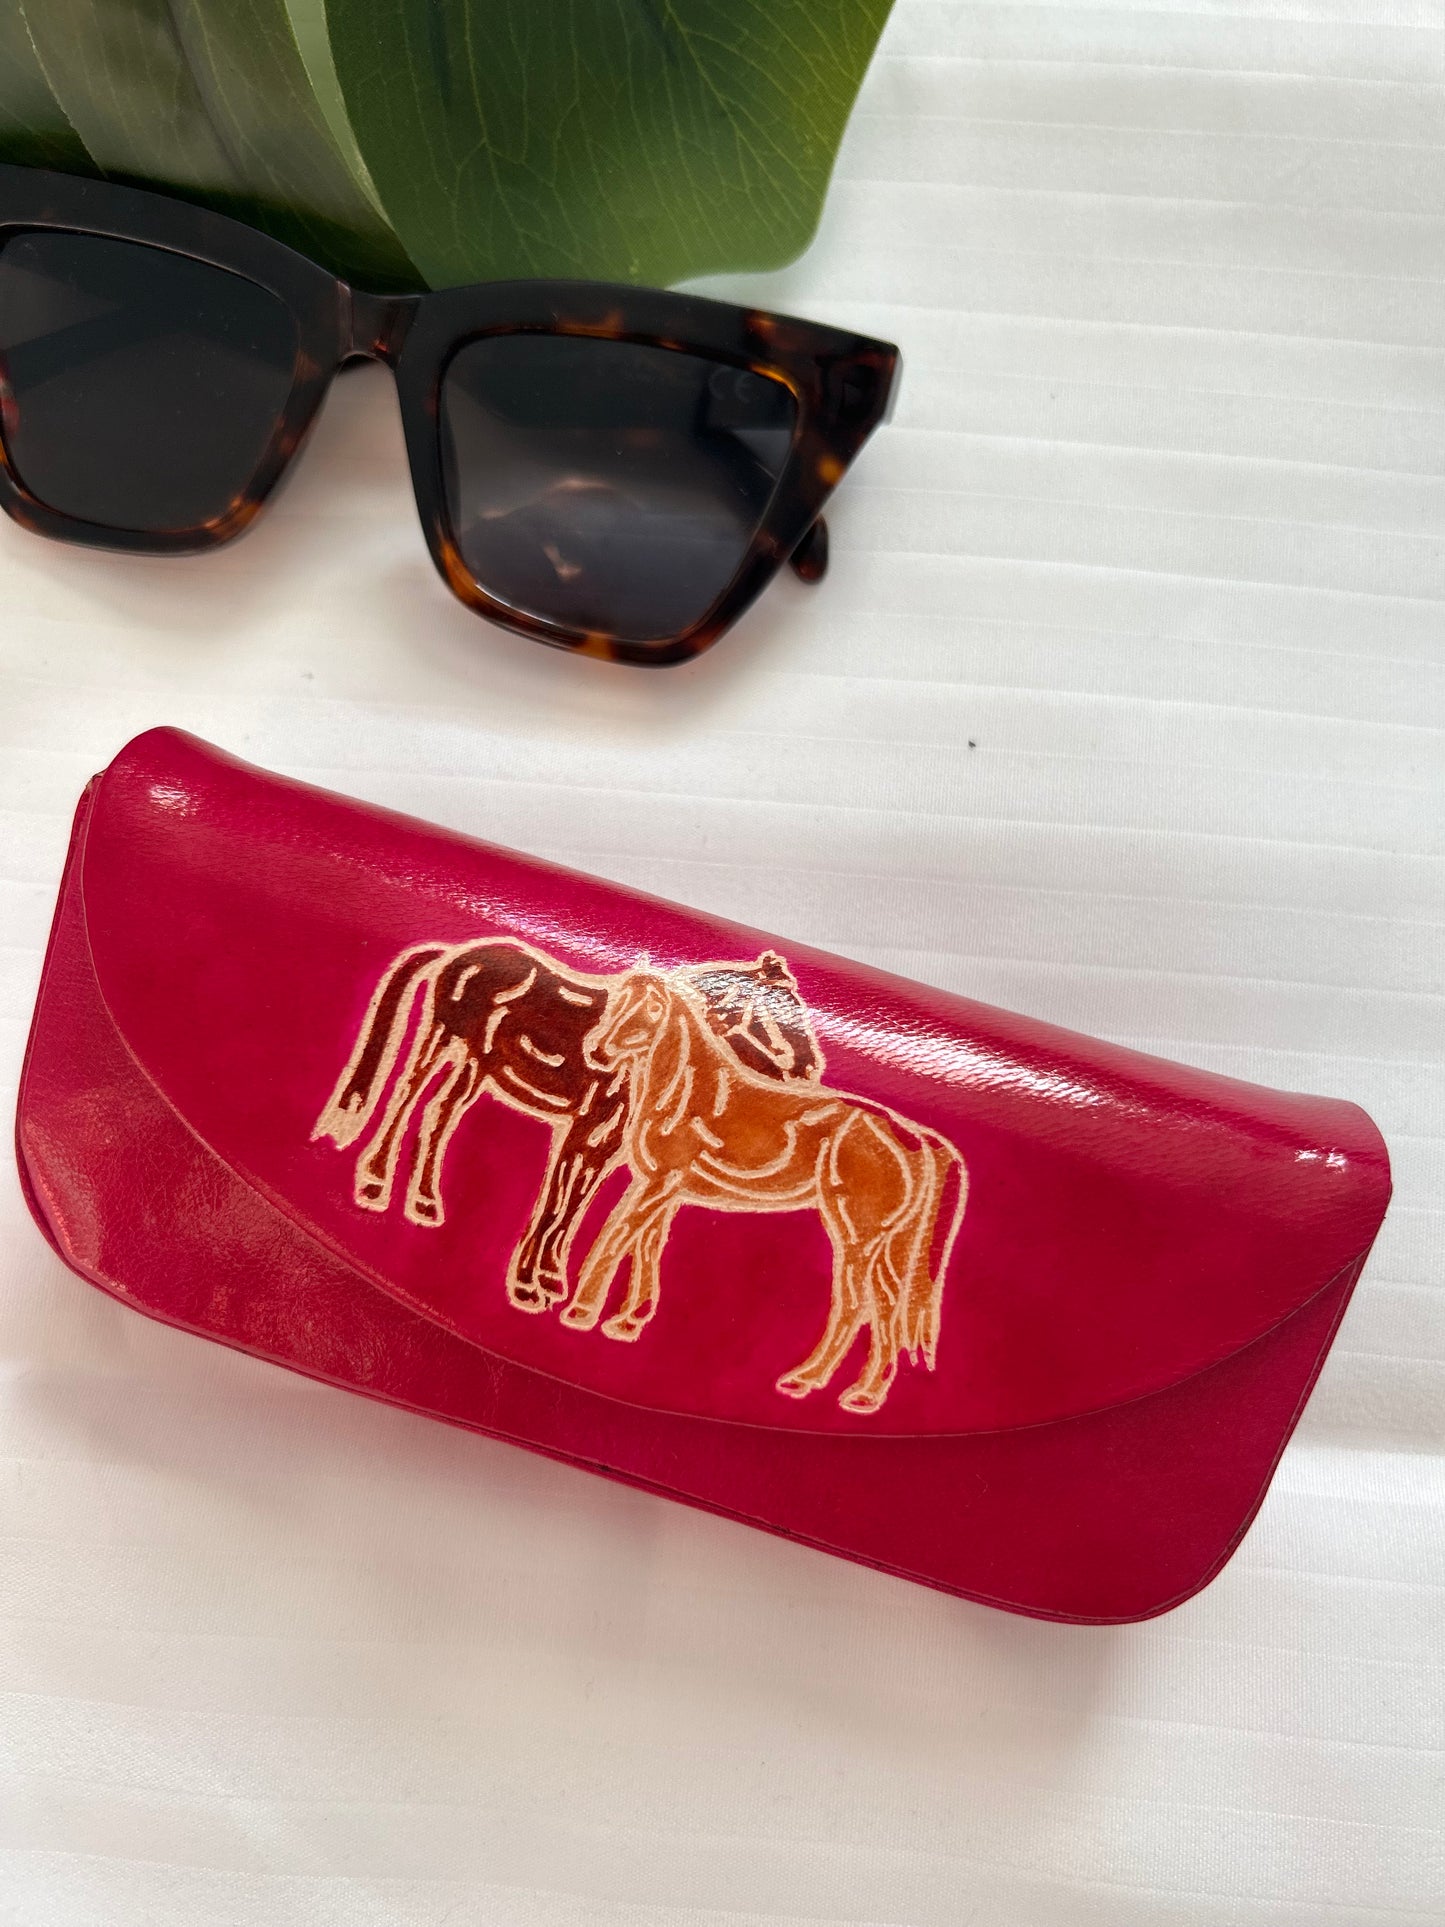 Stallion Sunglasses Case - Leather